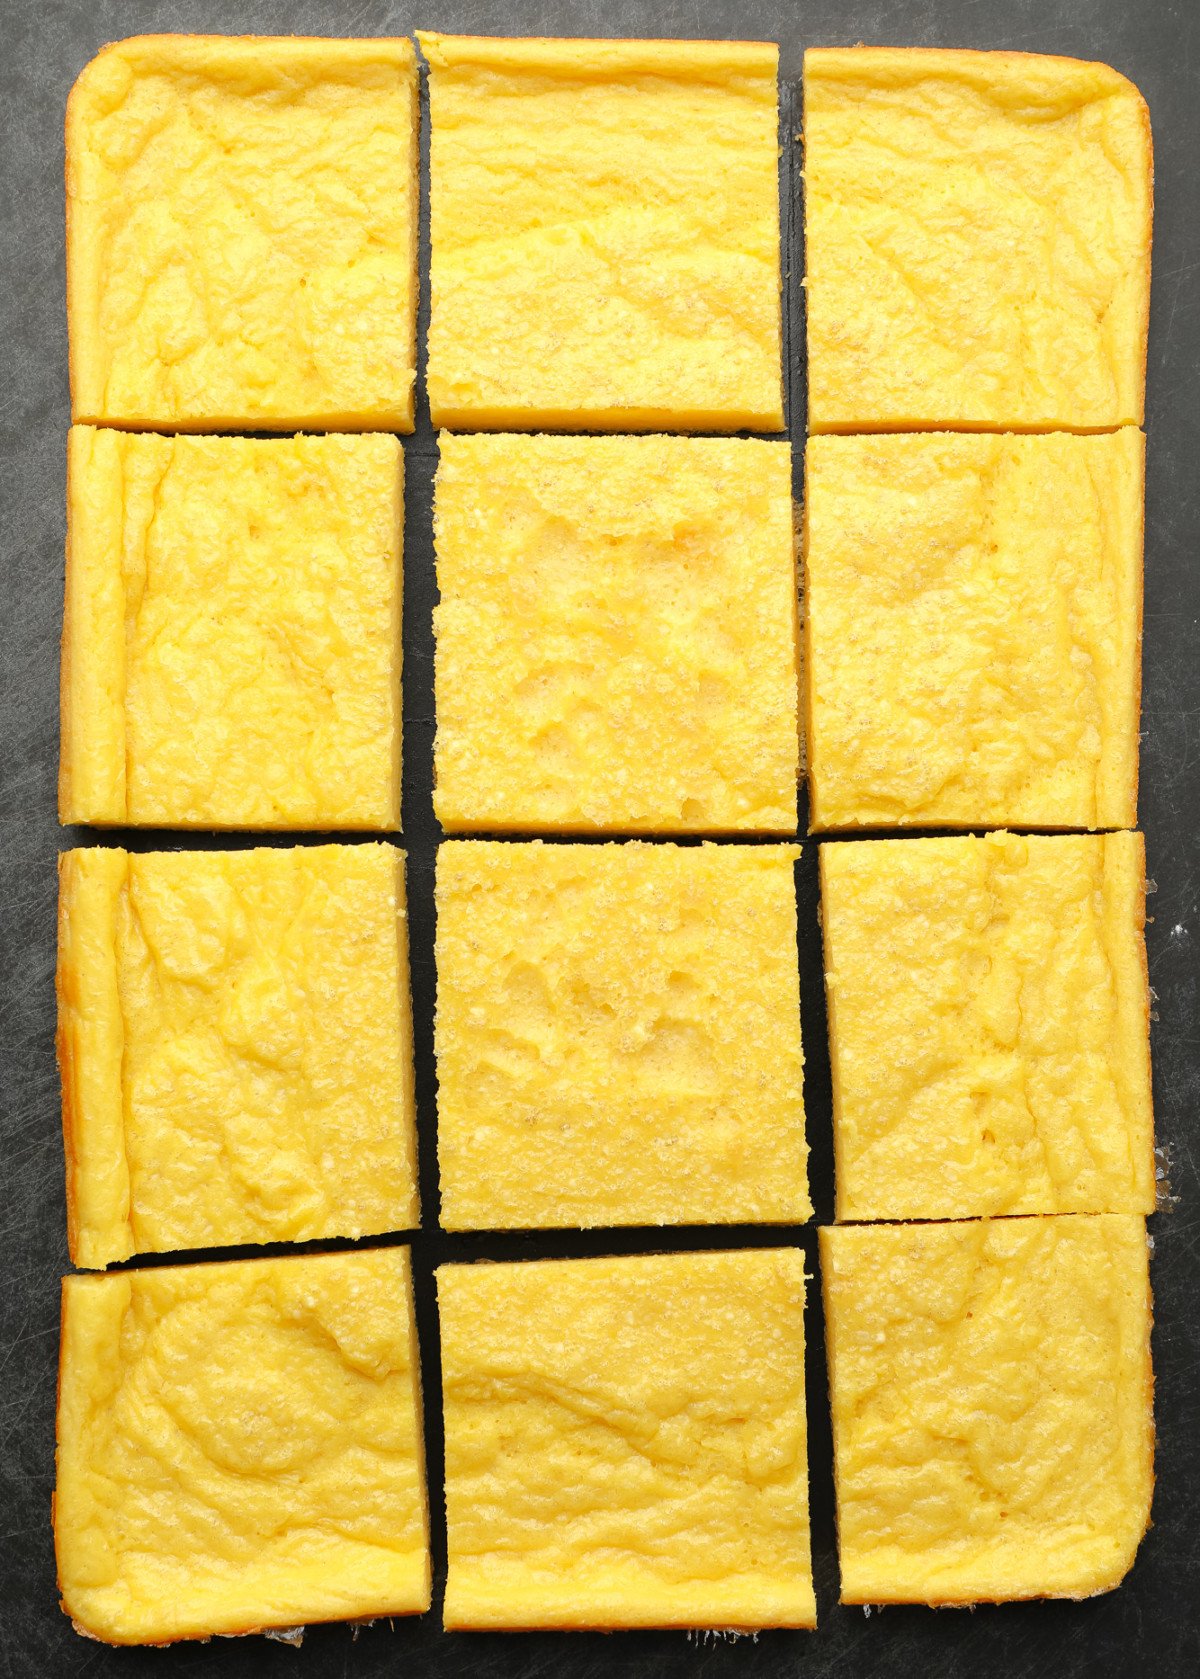 vegan baked egg patties cut into squares.